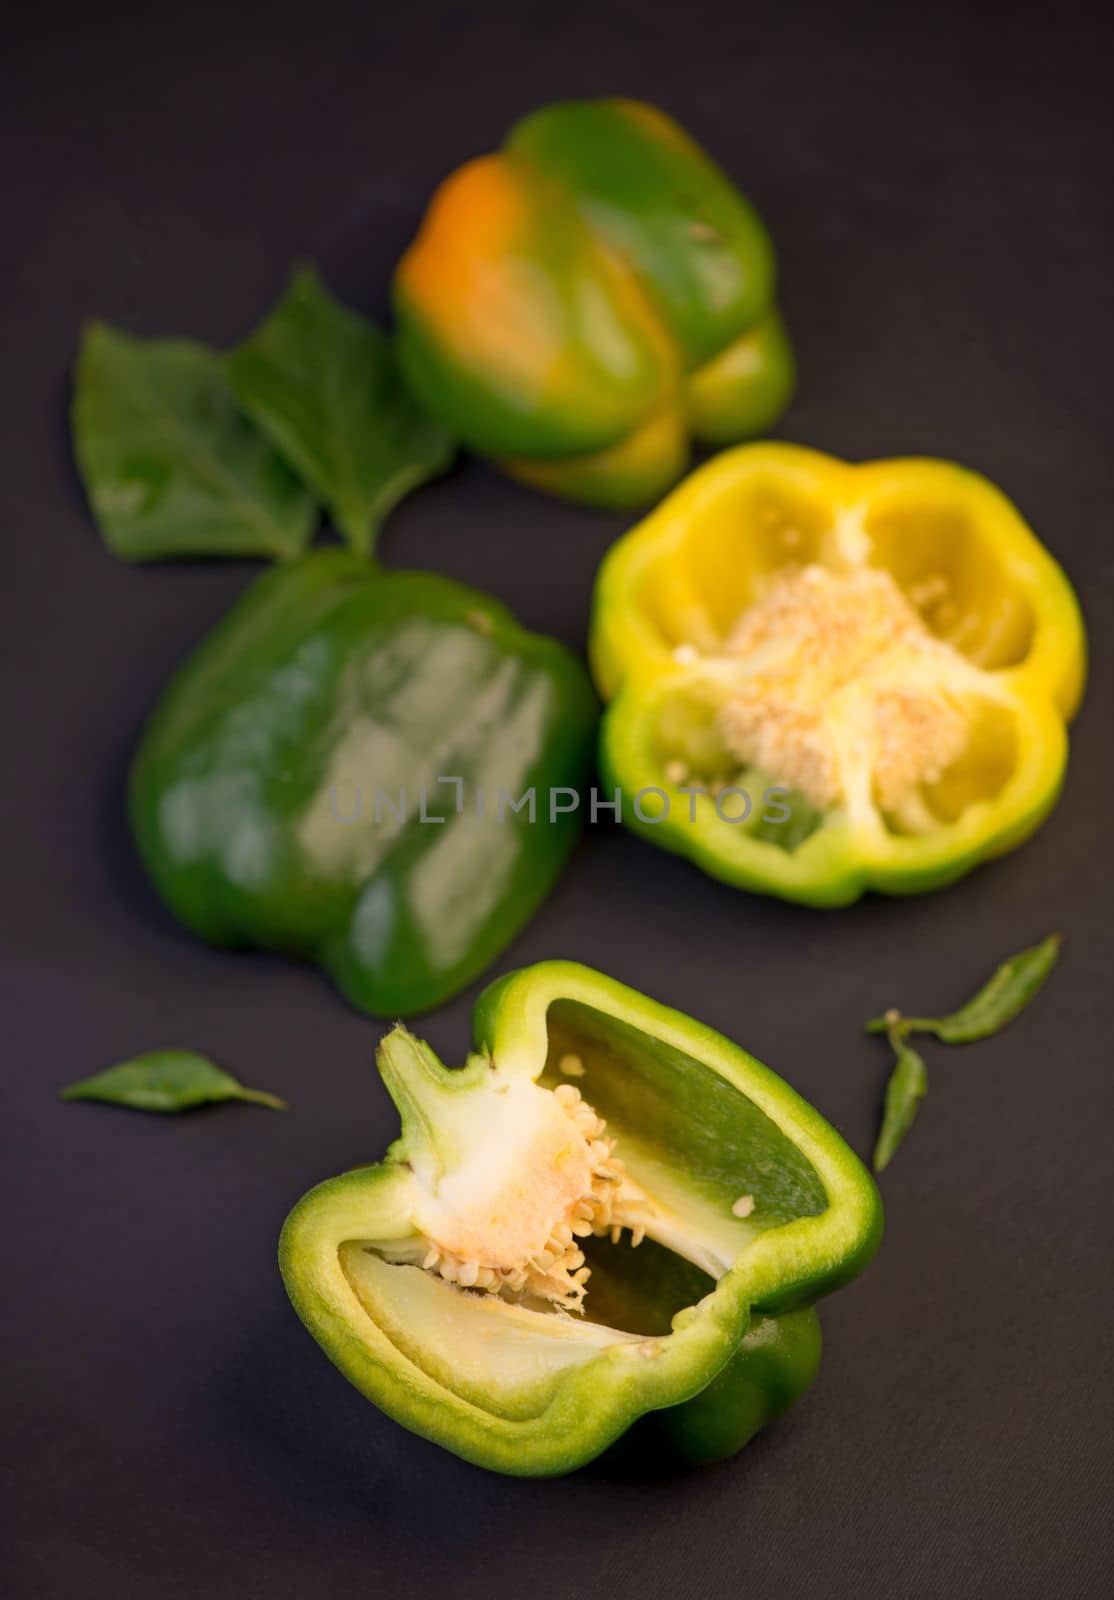 sweet pepper, green bell pepper on black background, full depth of field by aprilphoto